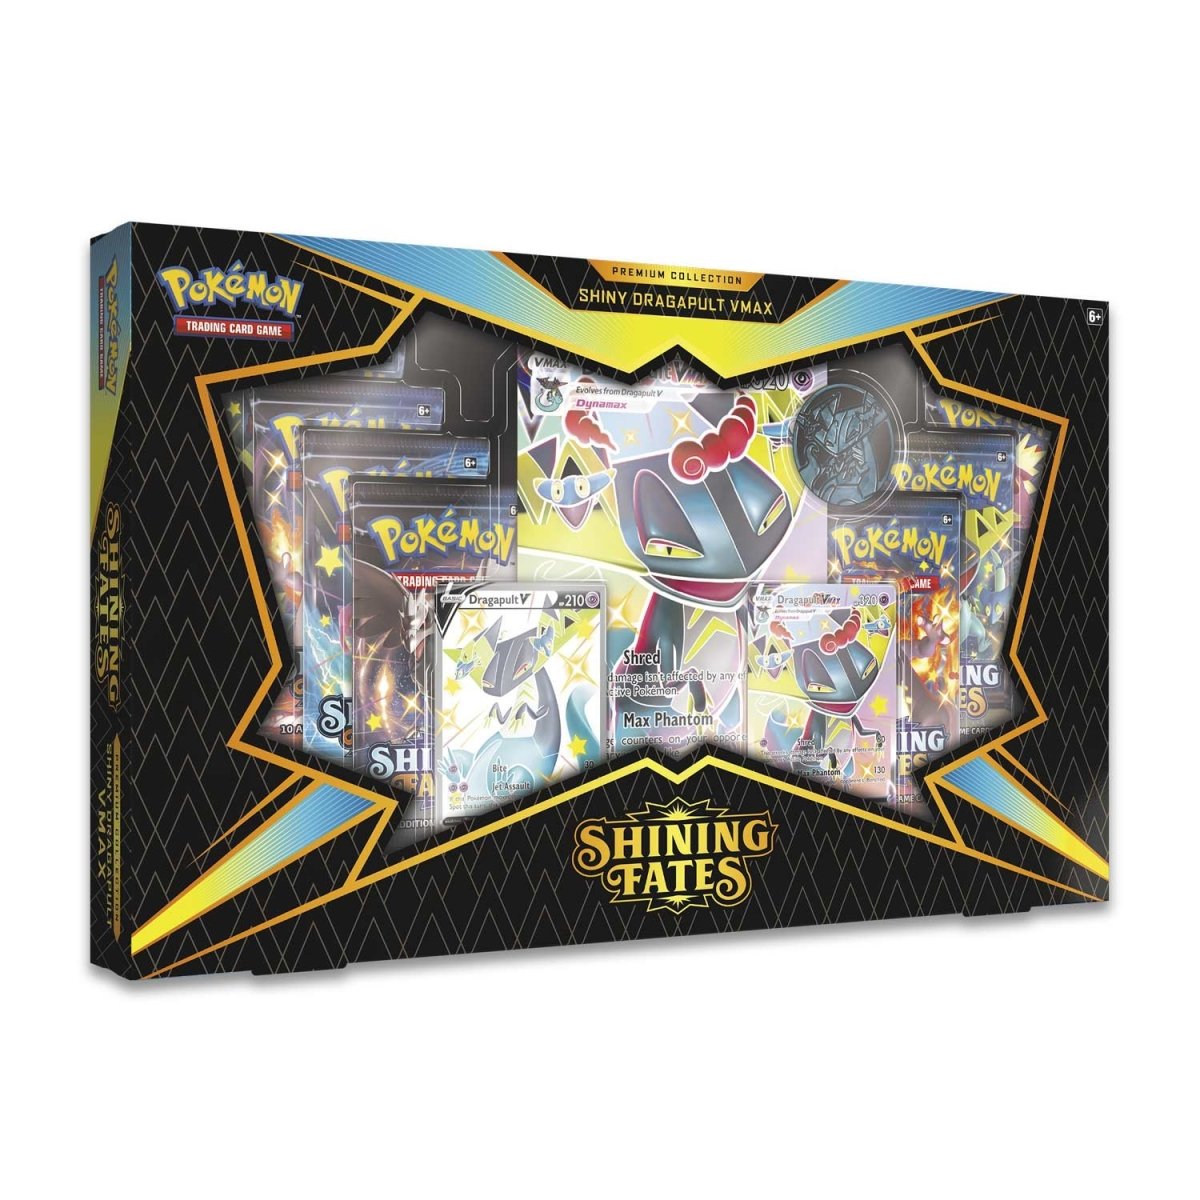 Pokémon TCG -  Shining Fates Premium Collection Shiny Dragapult V Max